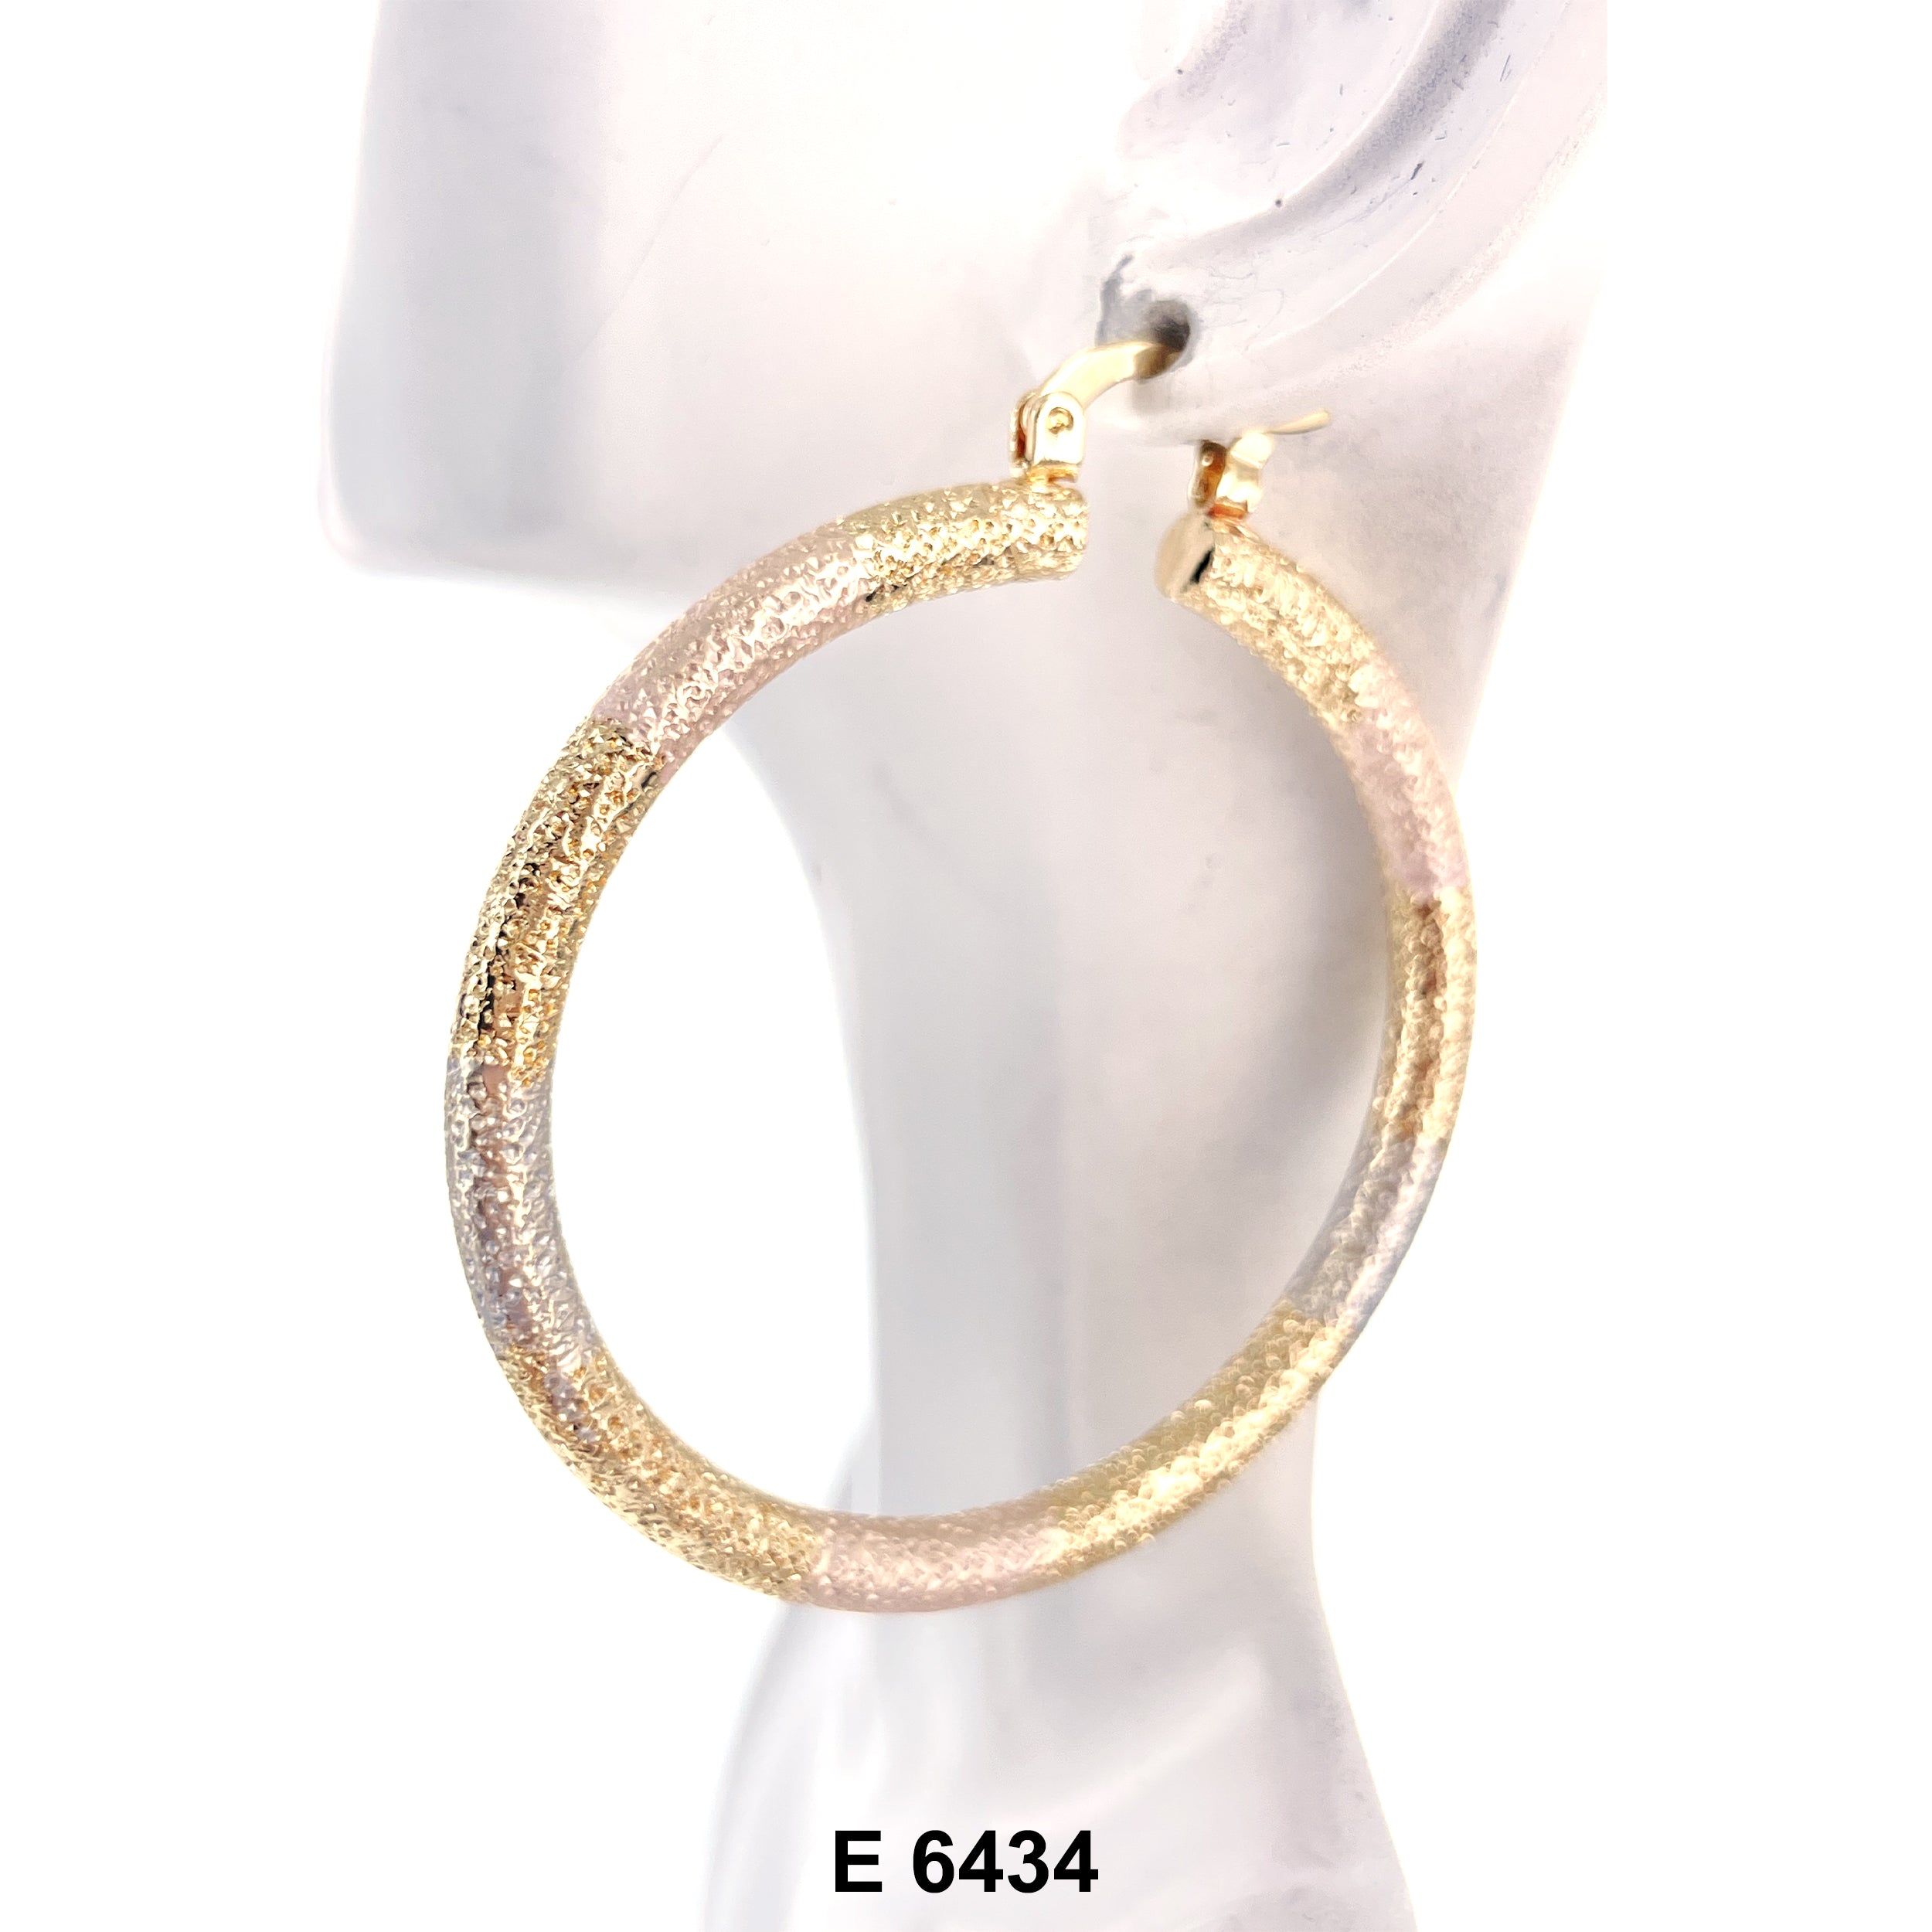 Engraved Hoop Earrings E 6434